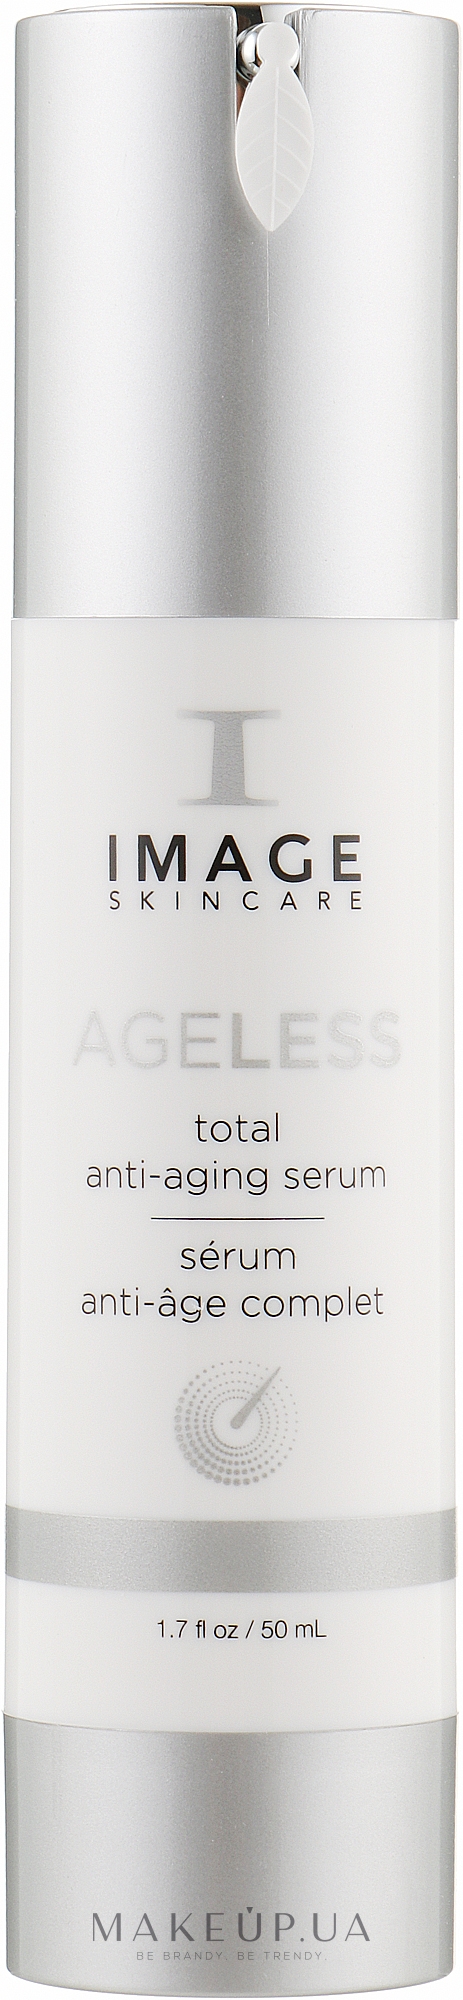 Омолаживающая сыворотка со стволовыми клетками - Image Skincare Ageless Total Anti-Aging Serum  — фото 50ml